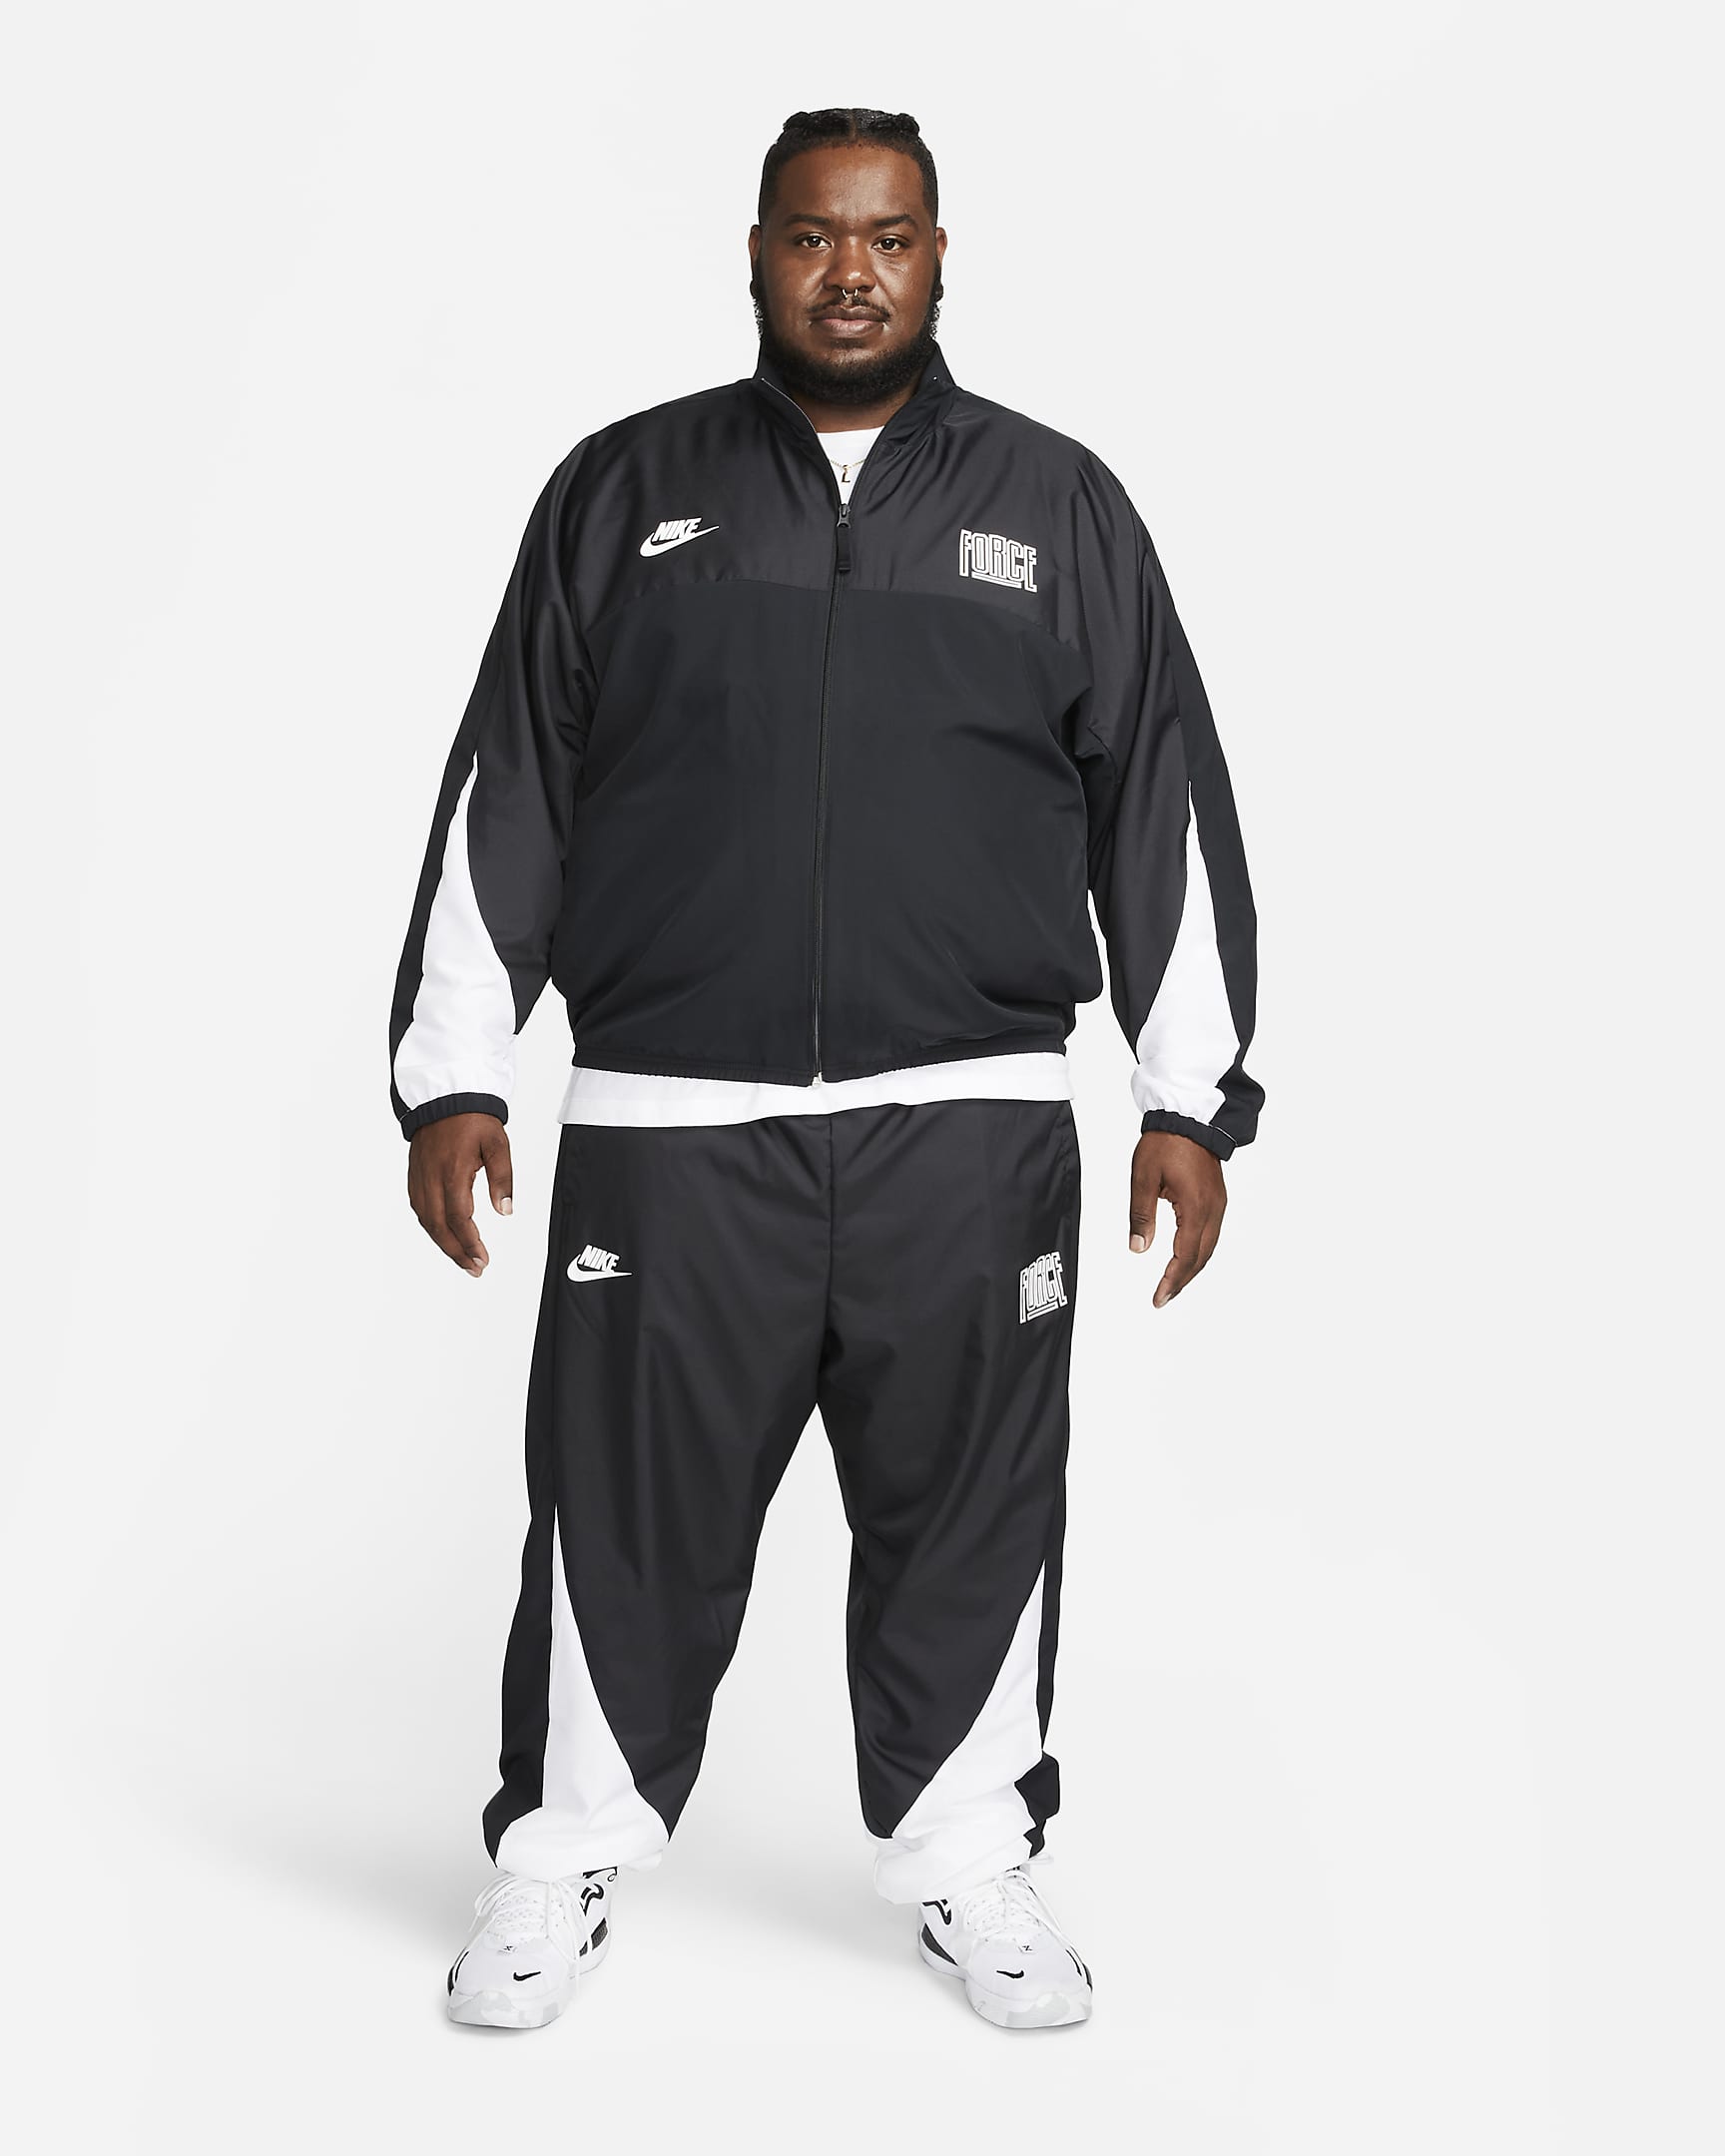 Nike Starting 5 Men's Basketball Jacket. Nike.com